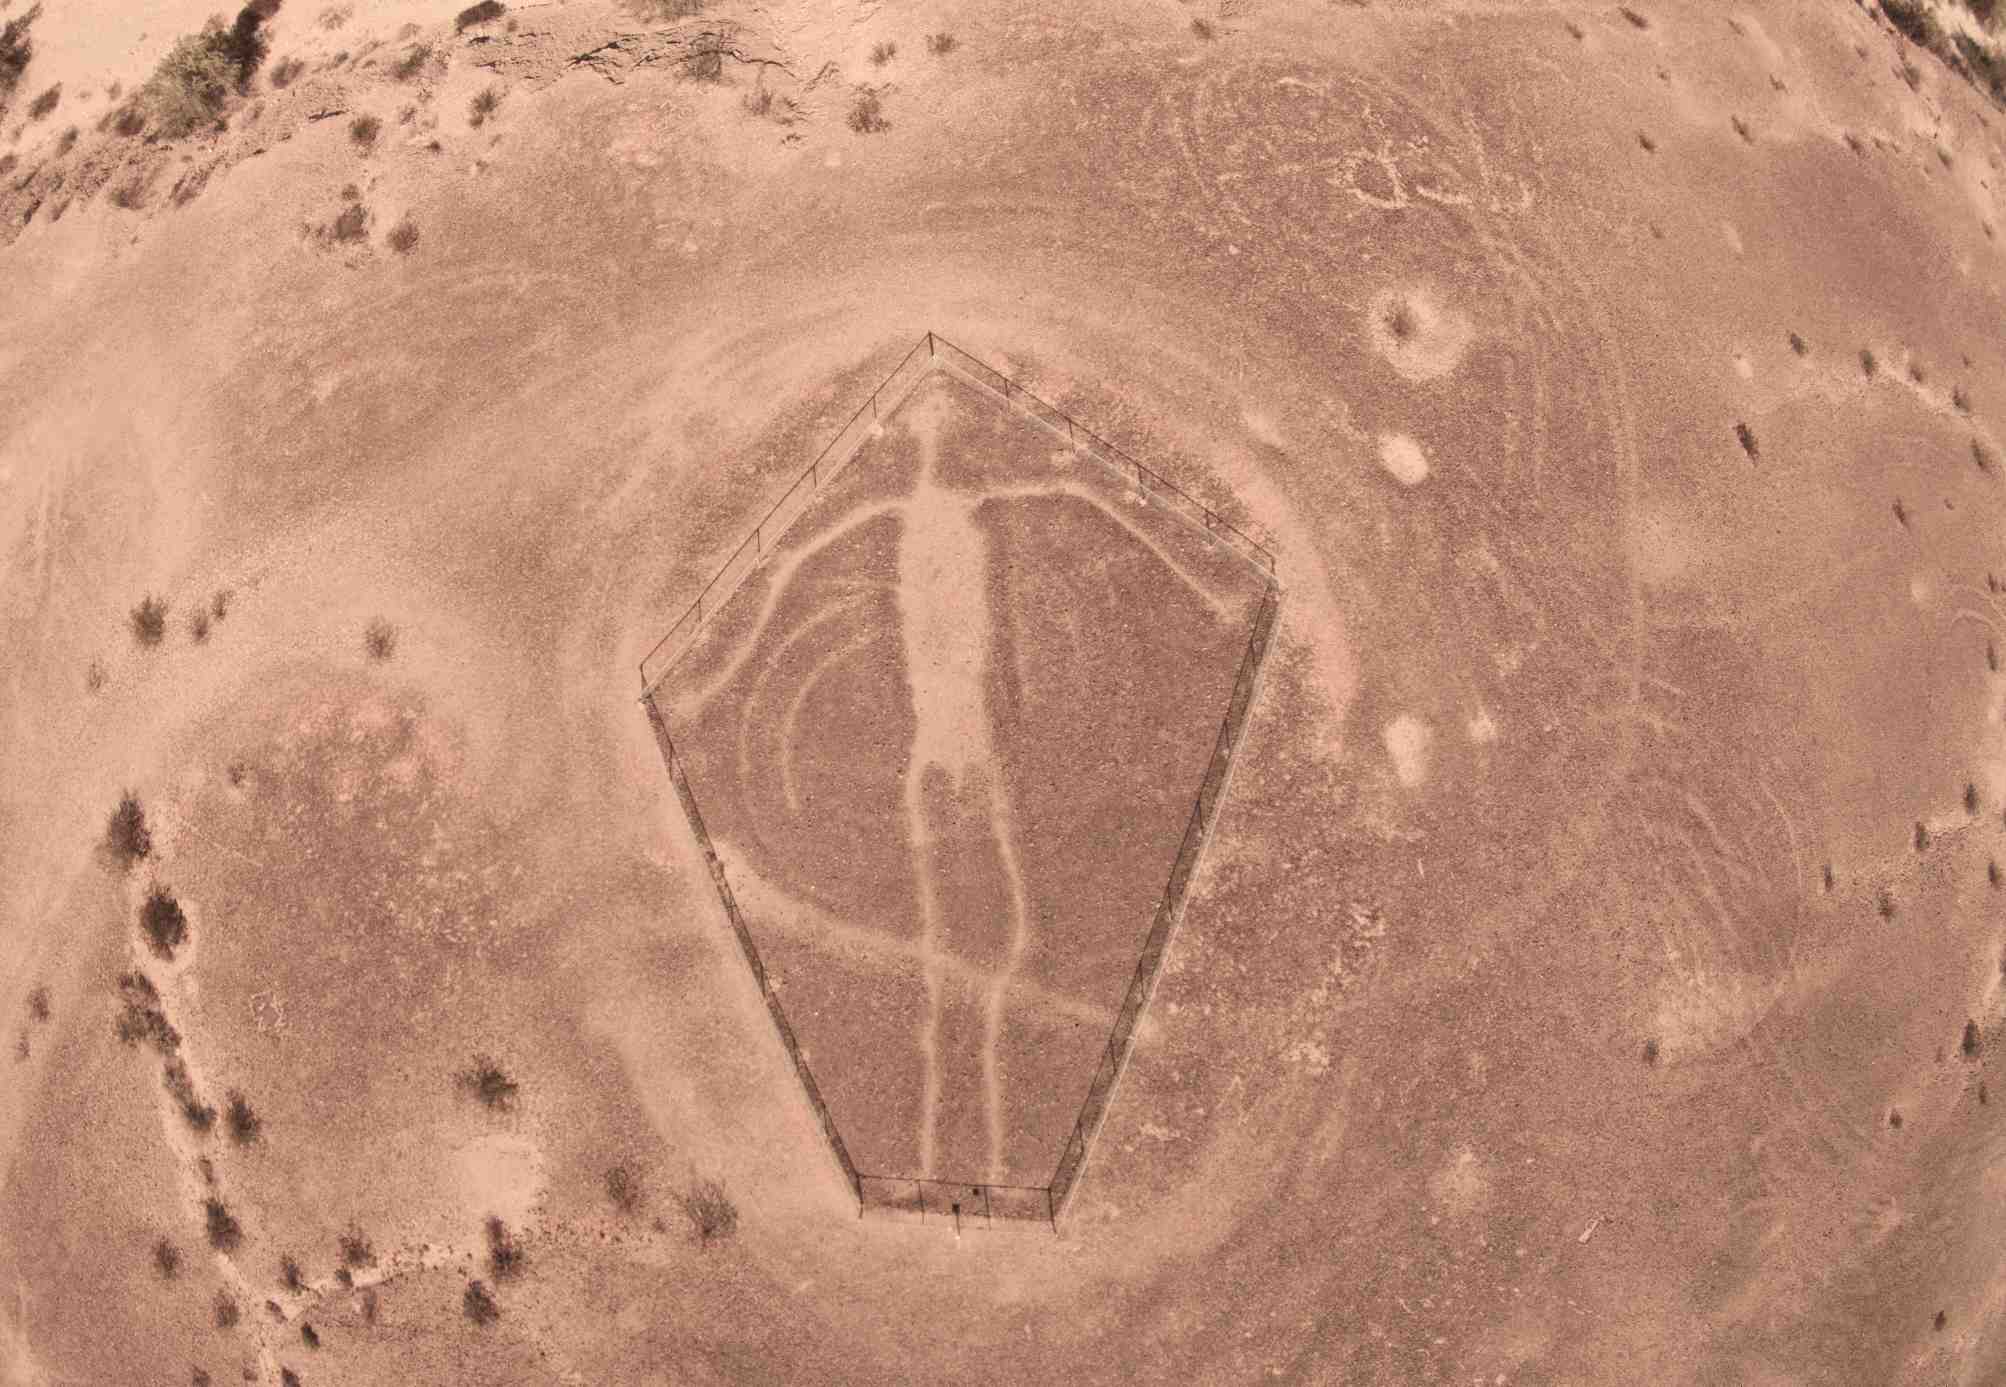 Blythe Intaglios: The impressive anthropomorphic geoglyphs of the Colorado Desert 1